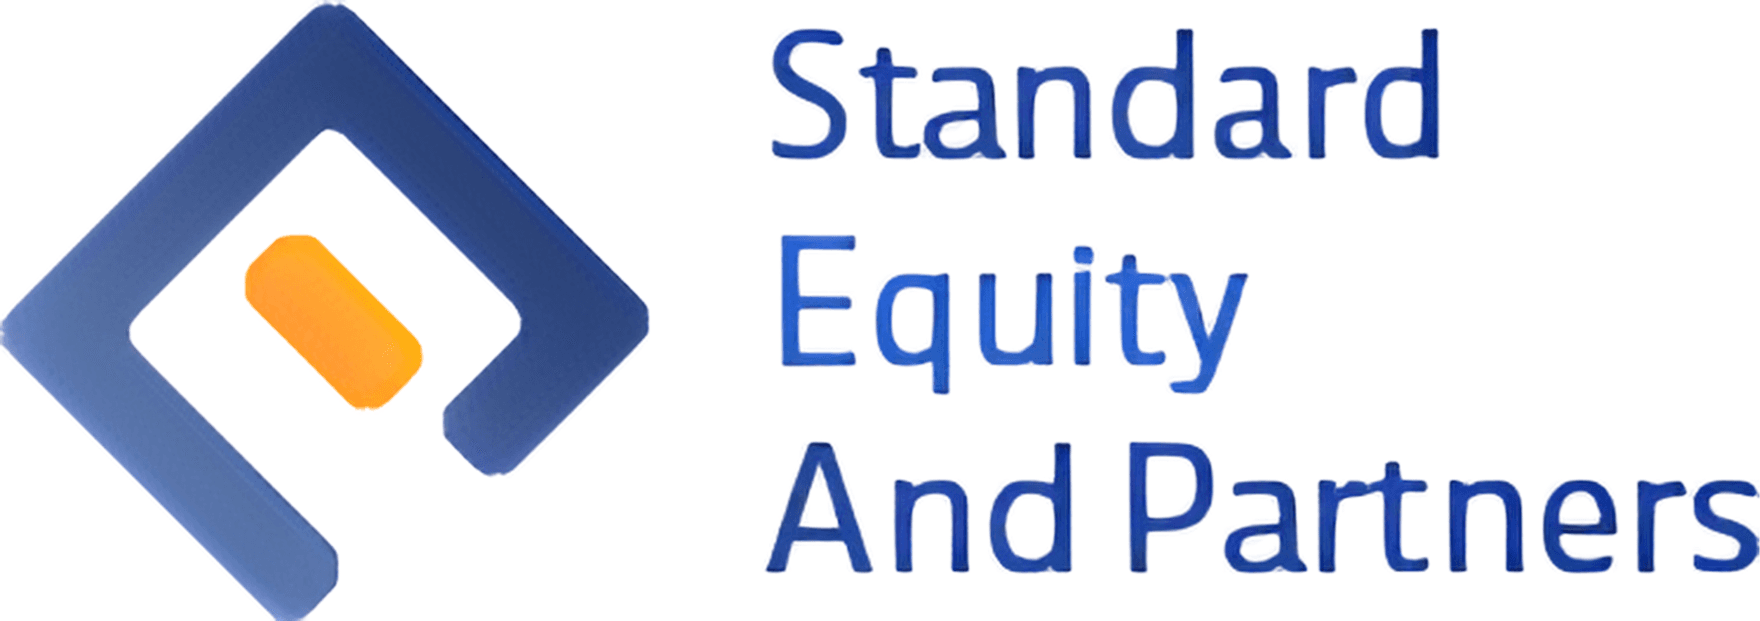 Standard Equity & Partners